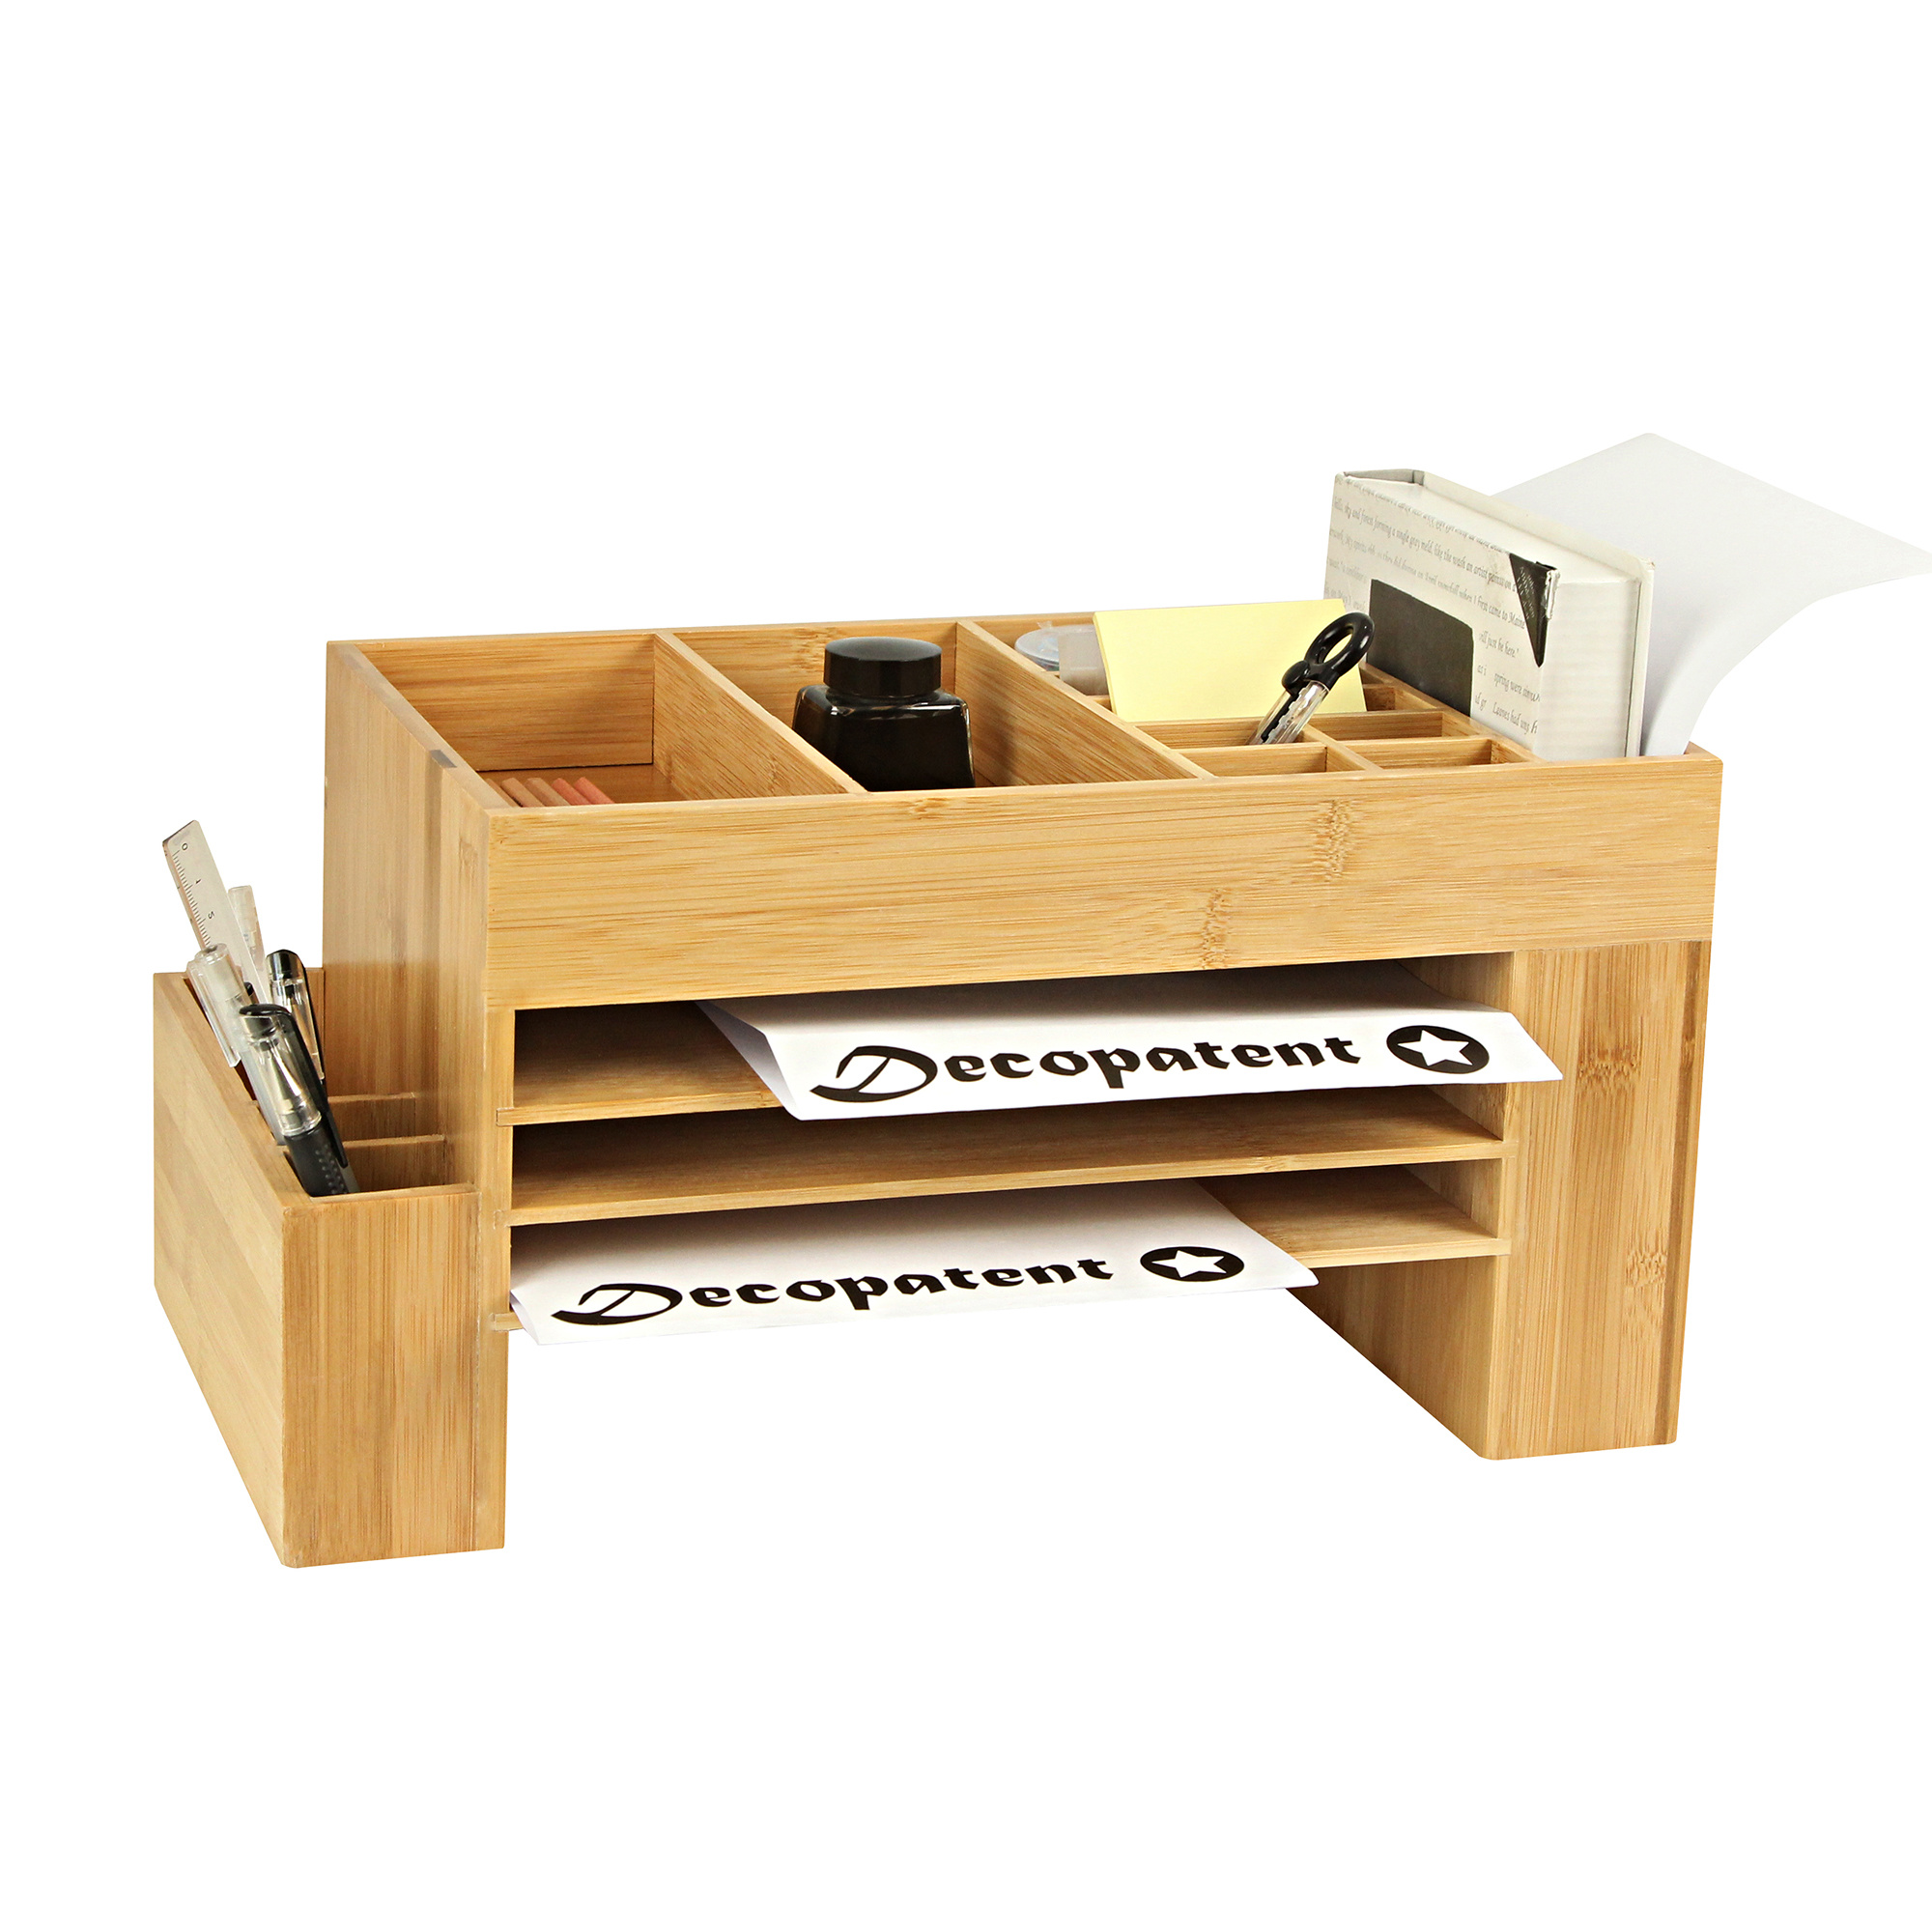 Badkamer Overtreffen Doelwit DECOPATENTBamboe bureau organizer met pennenbakje en brievenbakje – Bamboe  hout, groot formaat - Decopatent - 𝕍𝕖𝕣𝕜𝕠𝕠𝕡 ✪ 𝕔𝕠𝕞